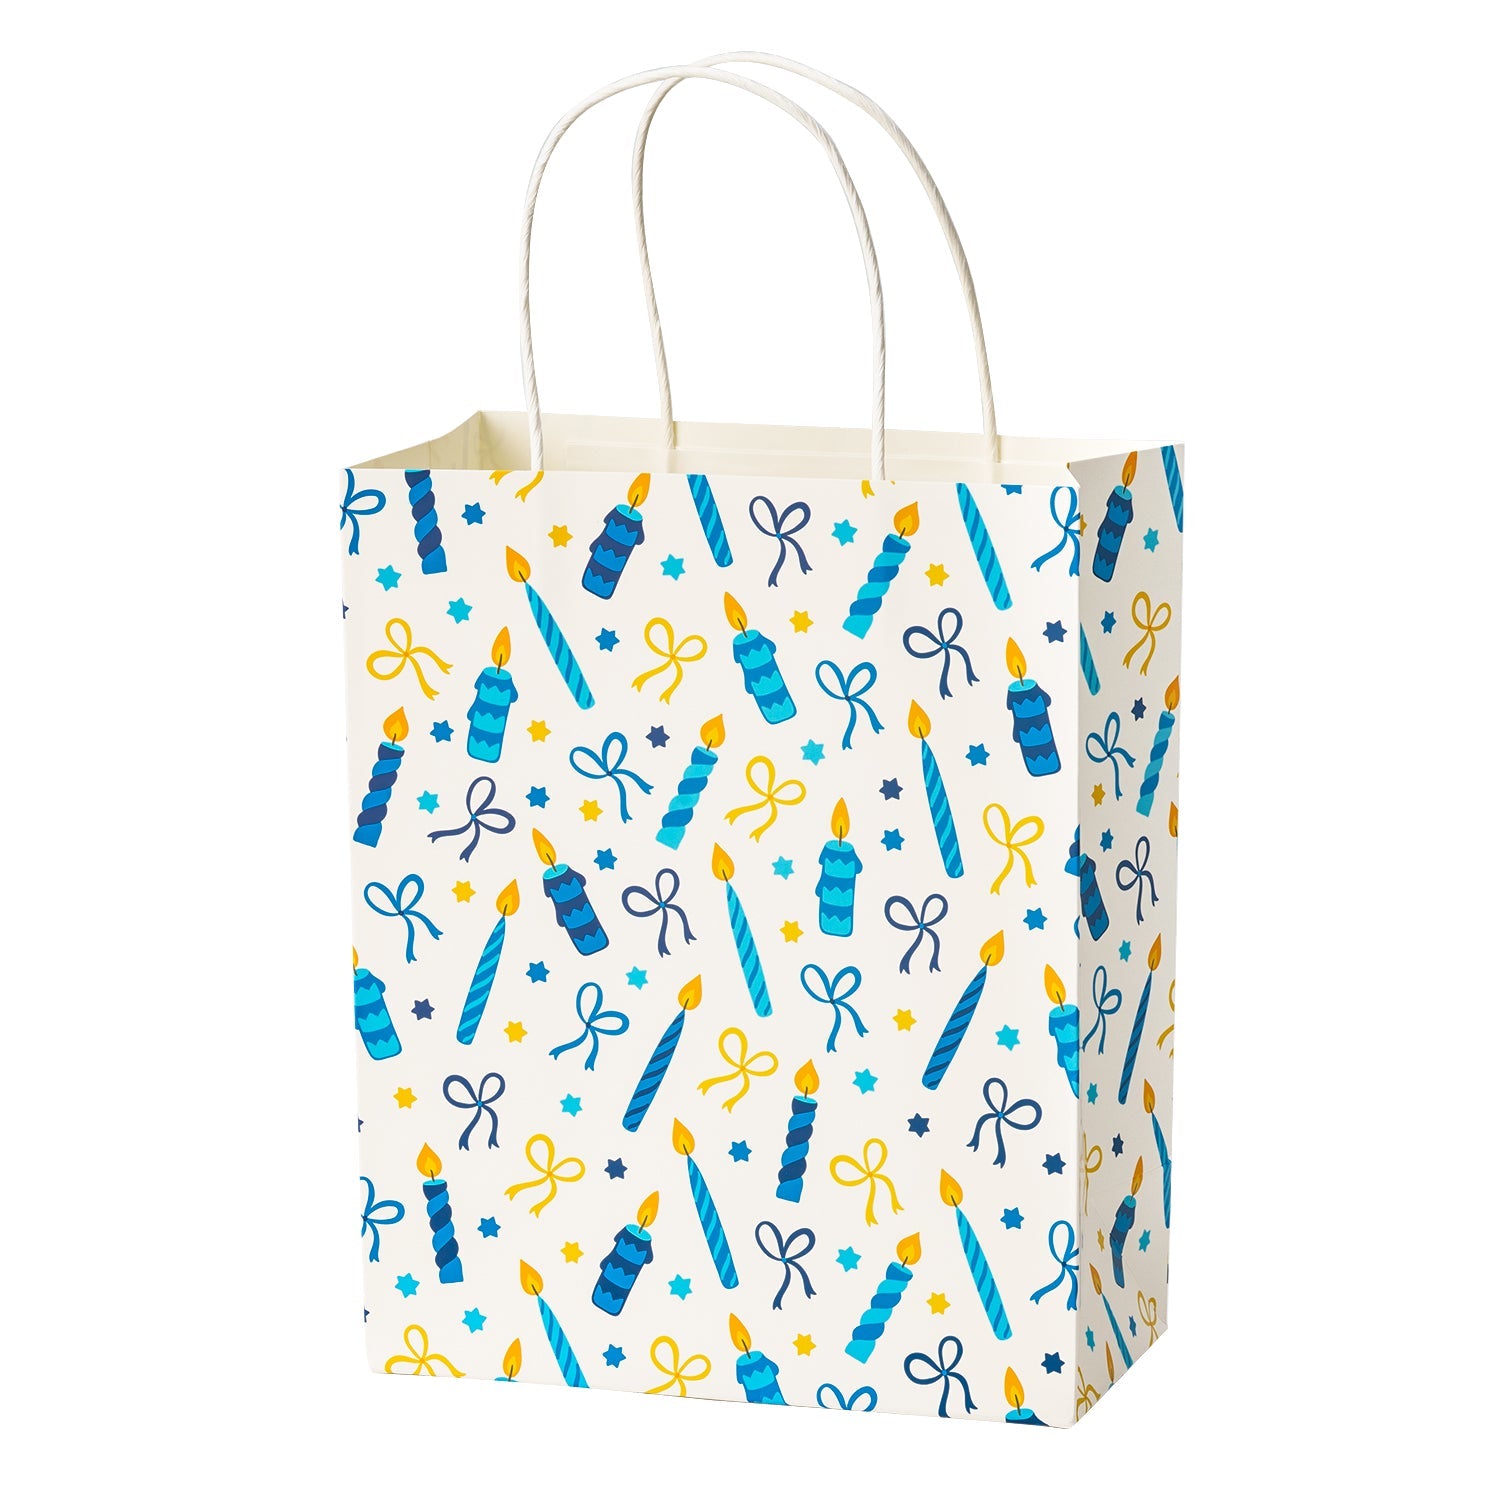 Hanukkah Medium Size Gift Bags 12 Pack 8"x4"x10"- Blue